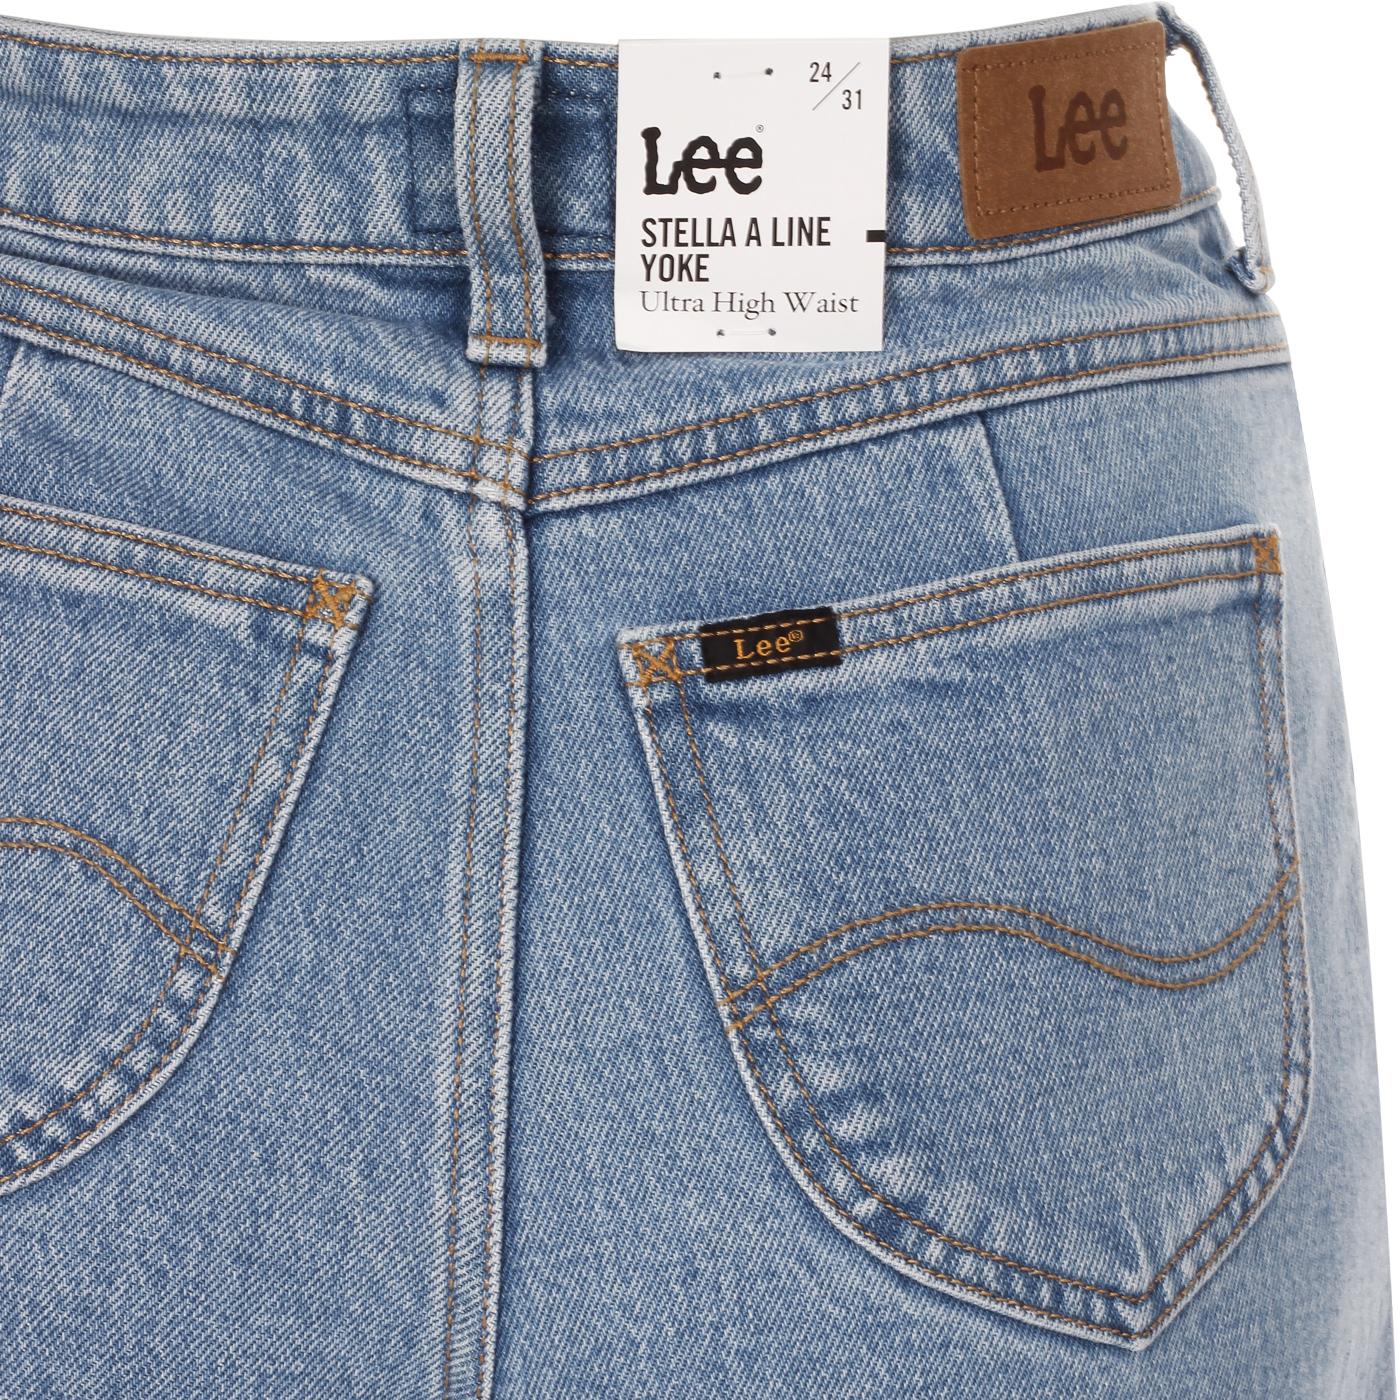 LEE JEANS Stella Women's A-Line Yoke Jeans Light Stonewash